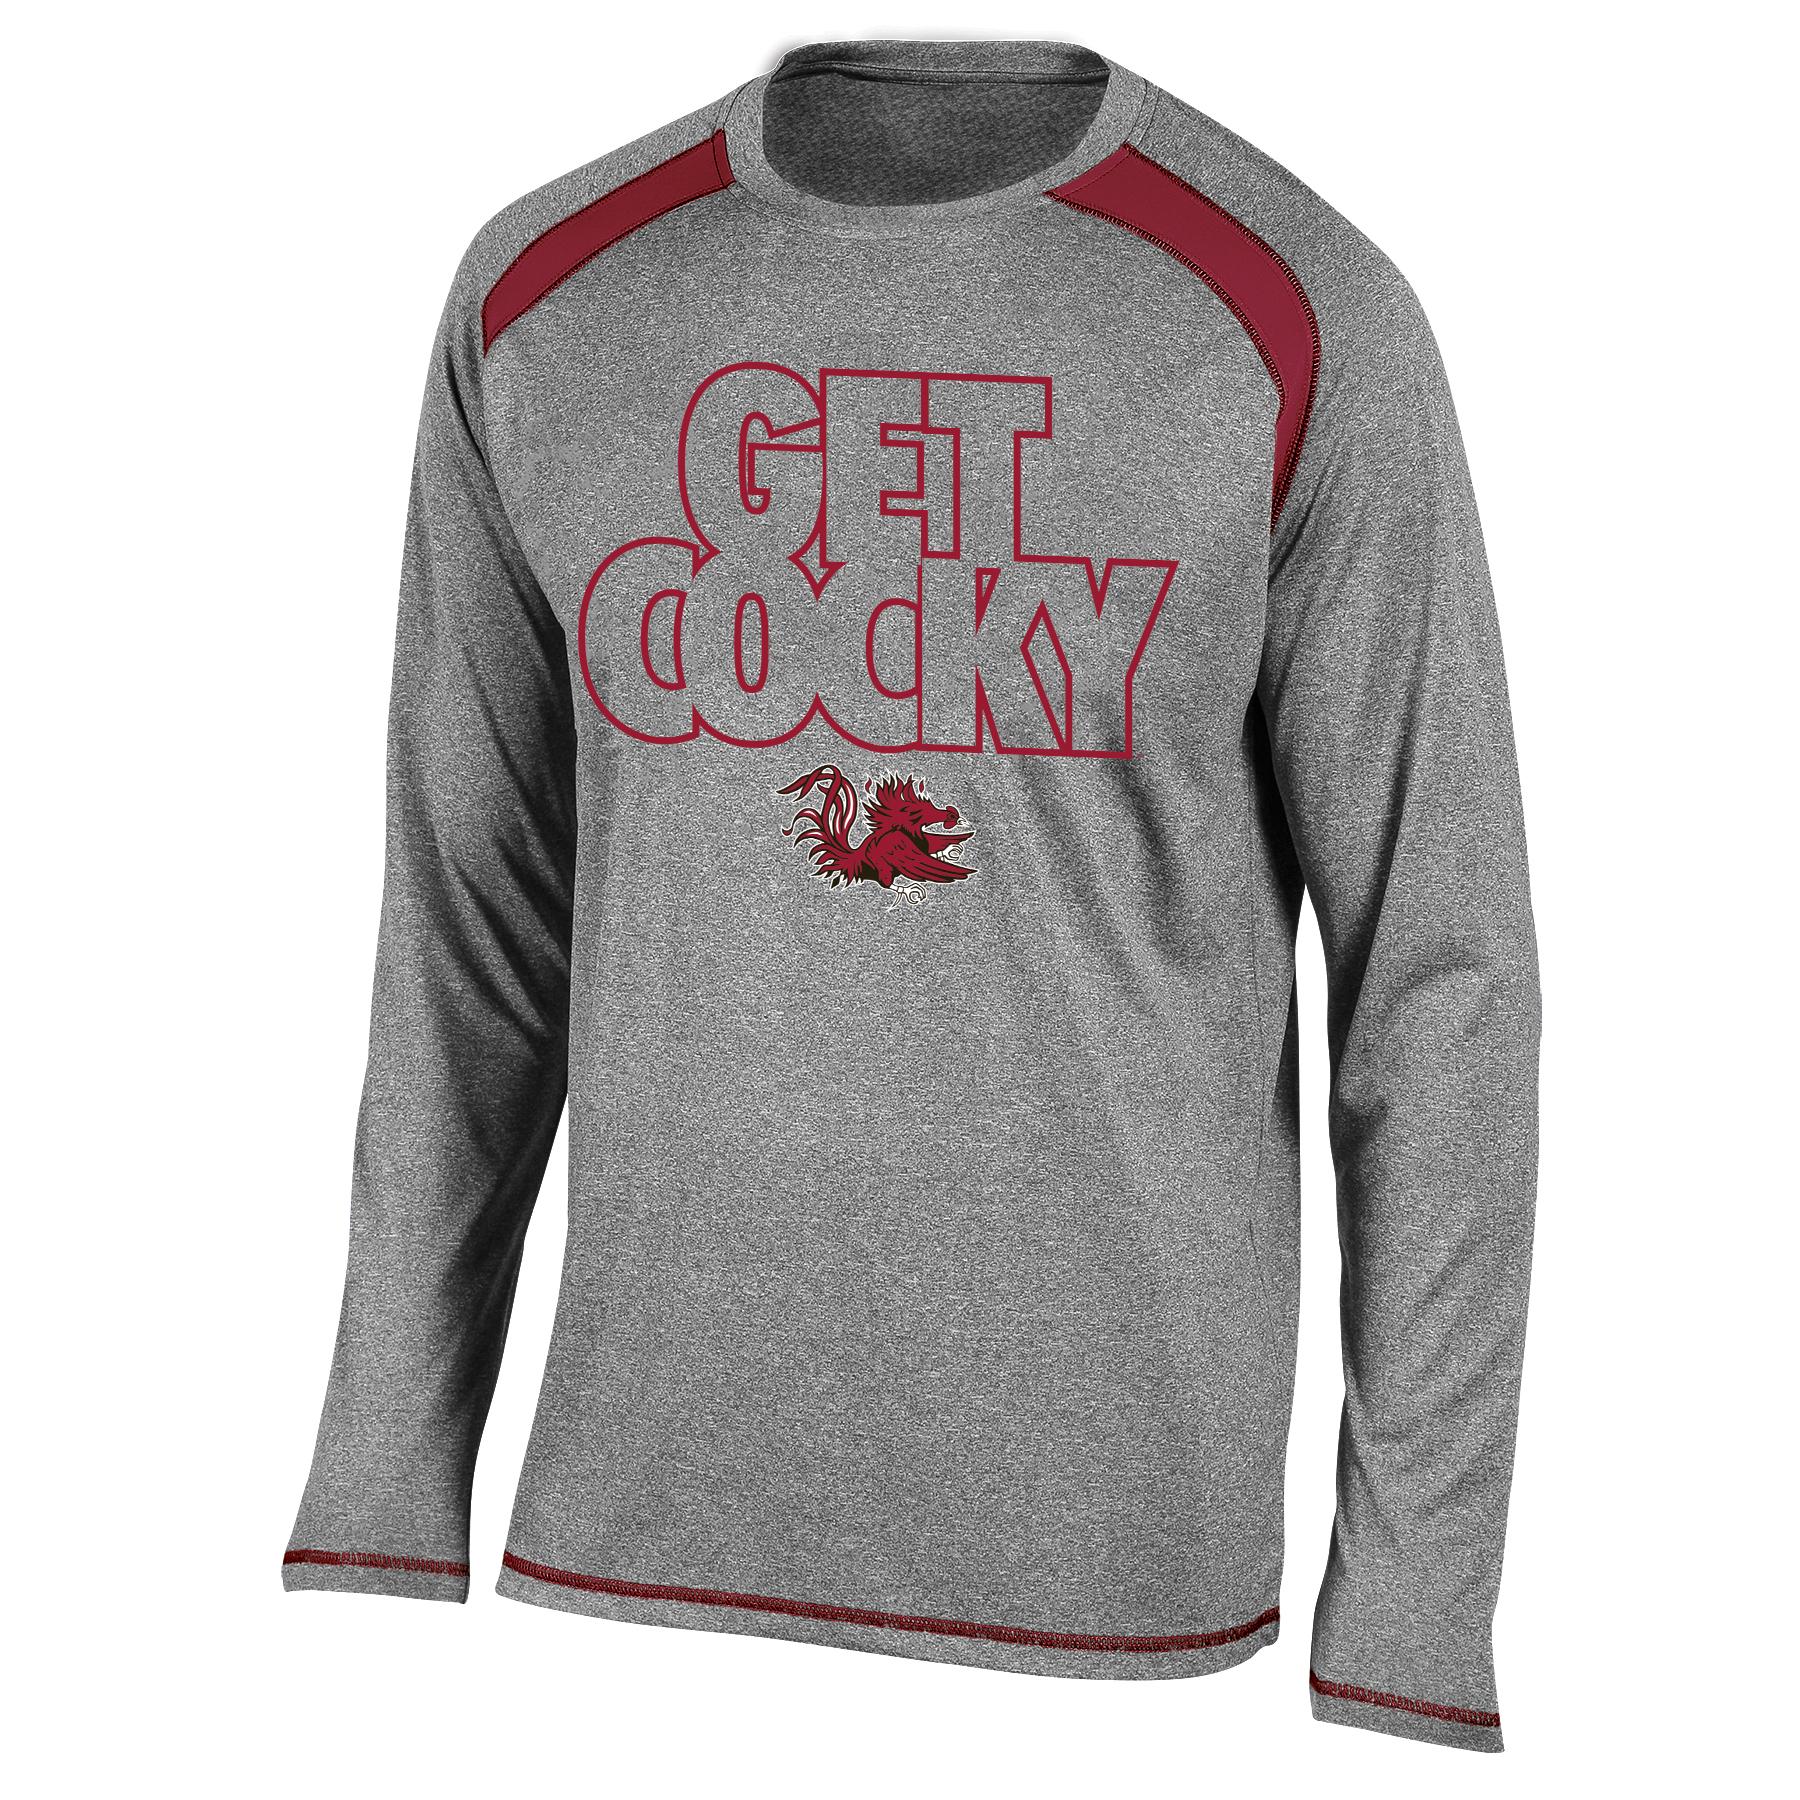 NCAA Men's Athletic Shirt - University of South Carolina Gamecocks